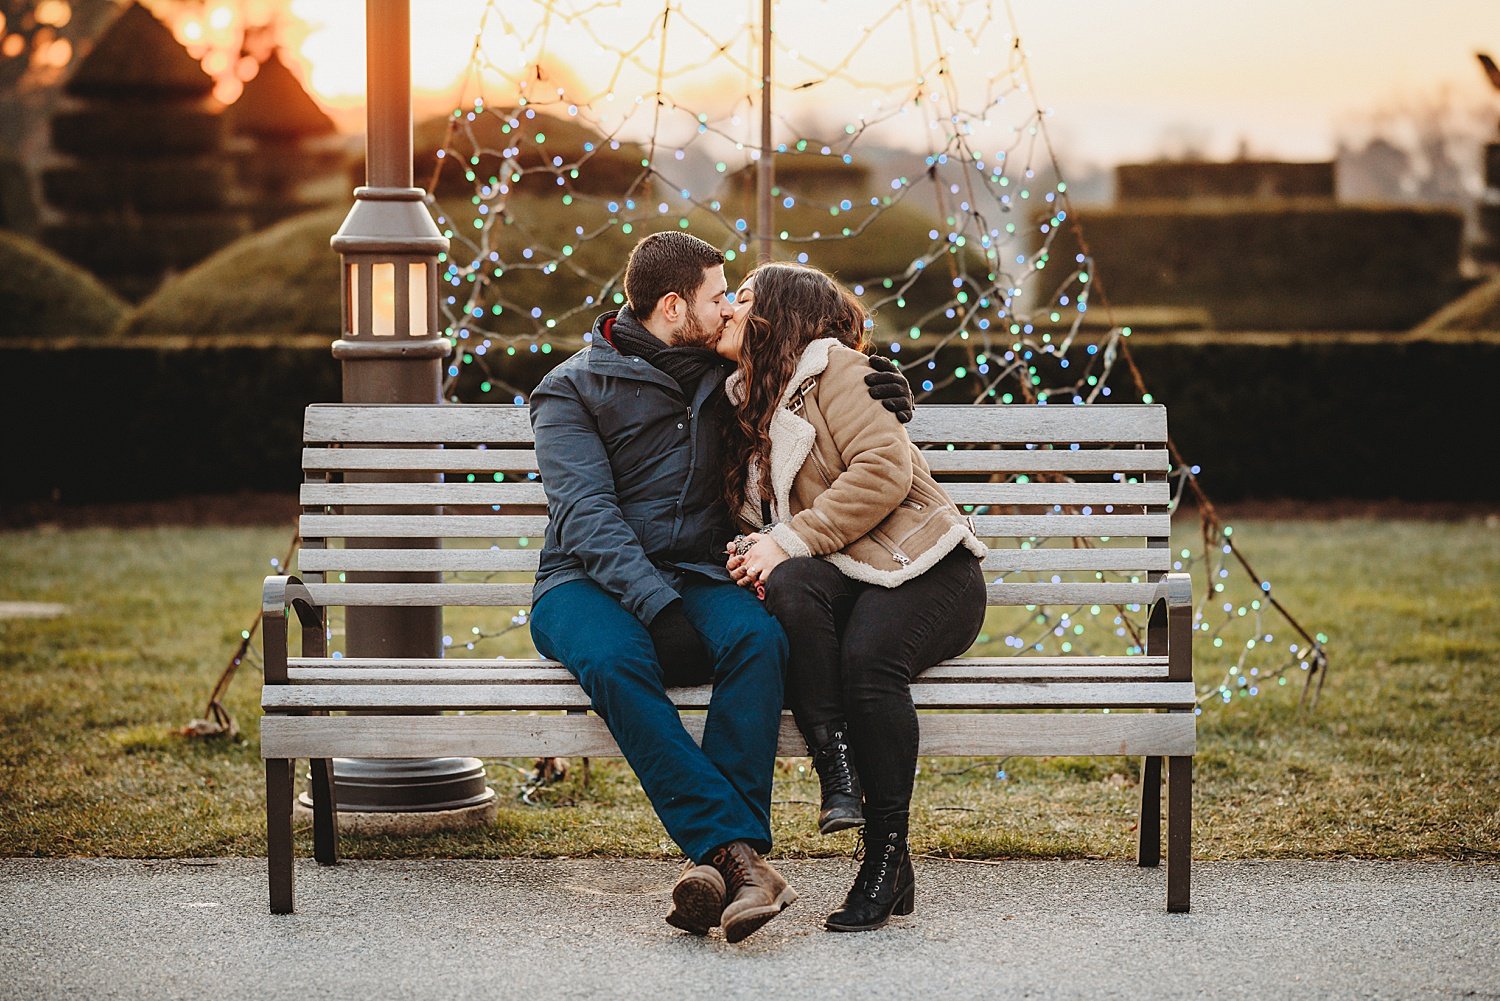 Longwood Gardens engagement surprise proposal wedding photographer Pennsylvania winter Christmas lights